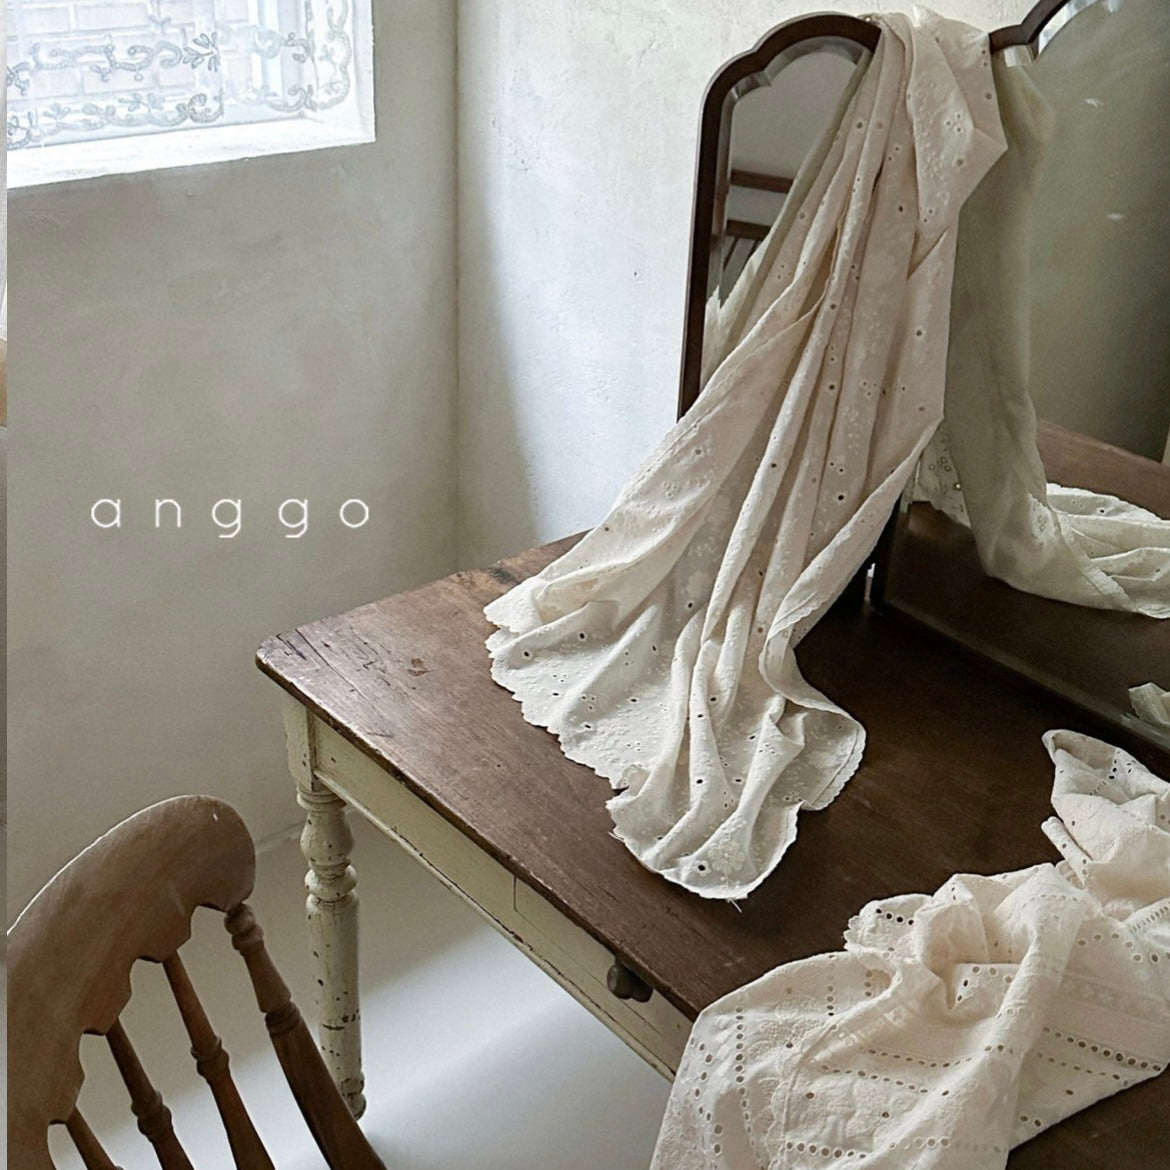 anggo blanket [anggo]